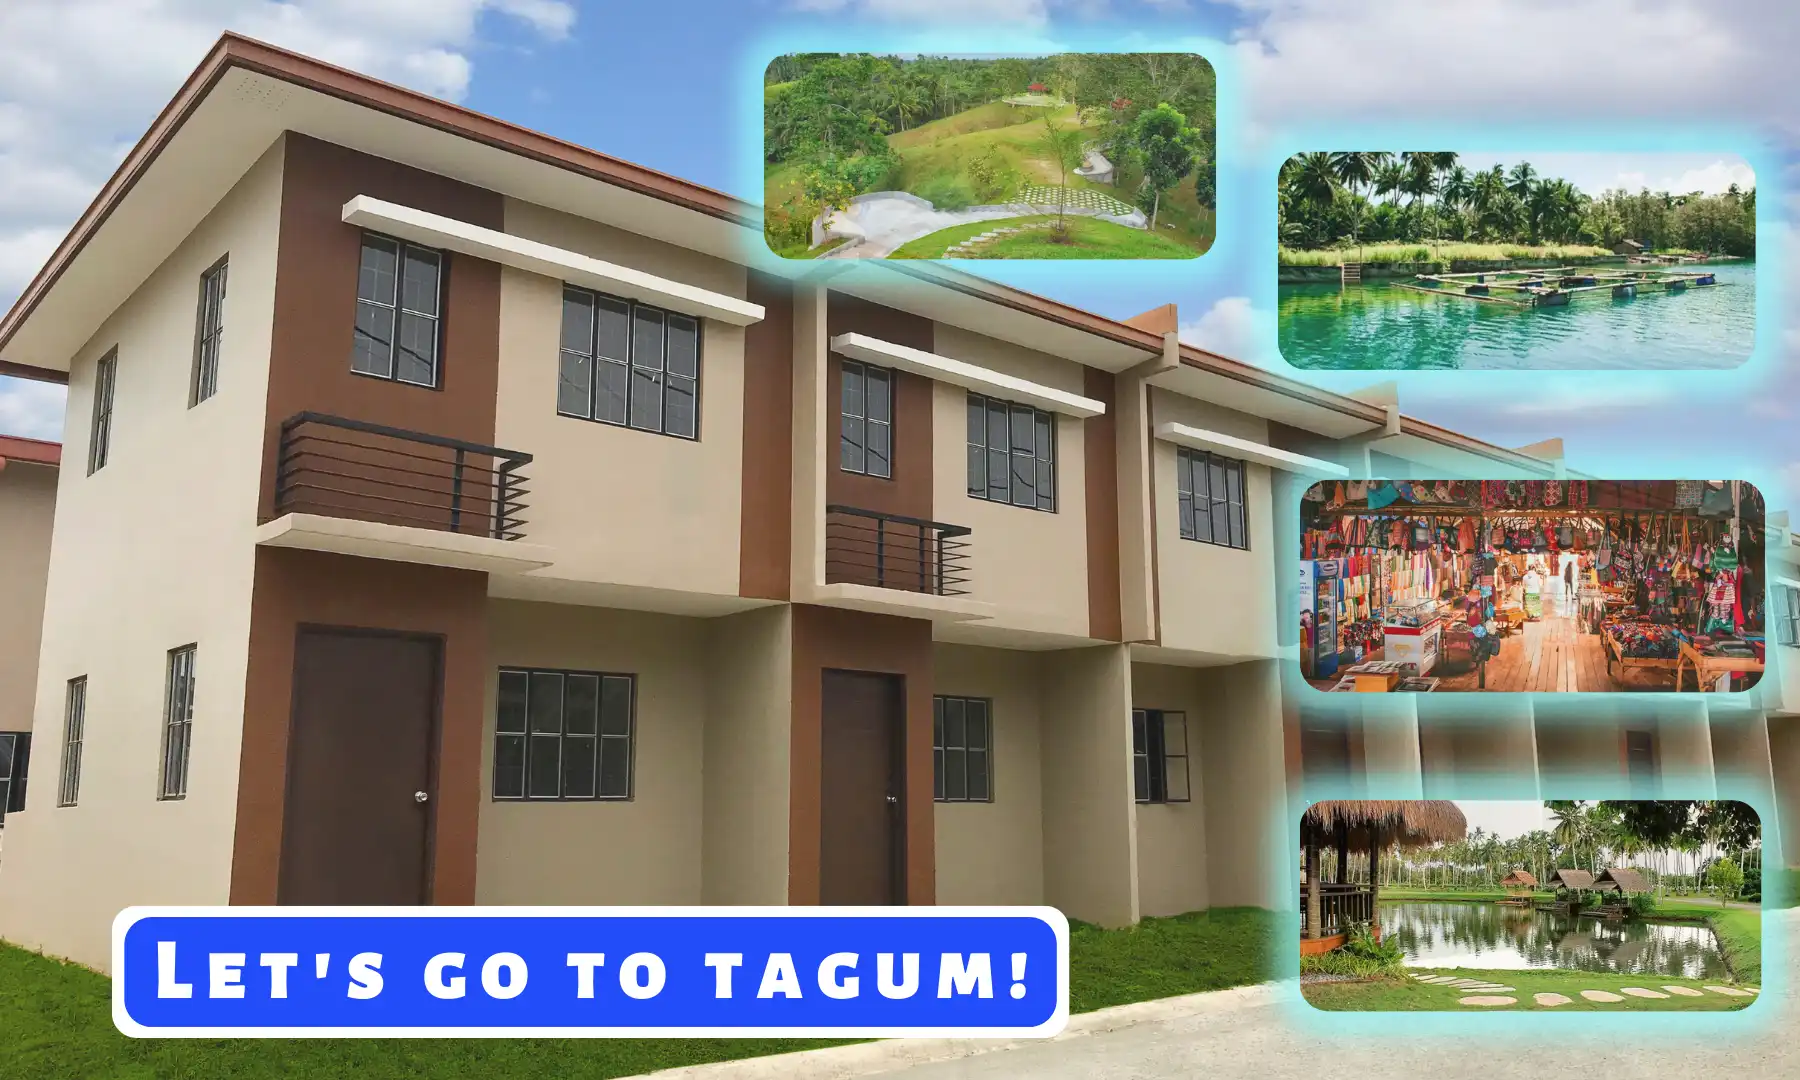 The New Tourism Capital of the South Tagum City Tourist Spots near Lumina Homes